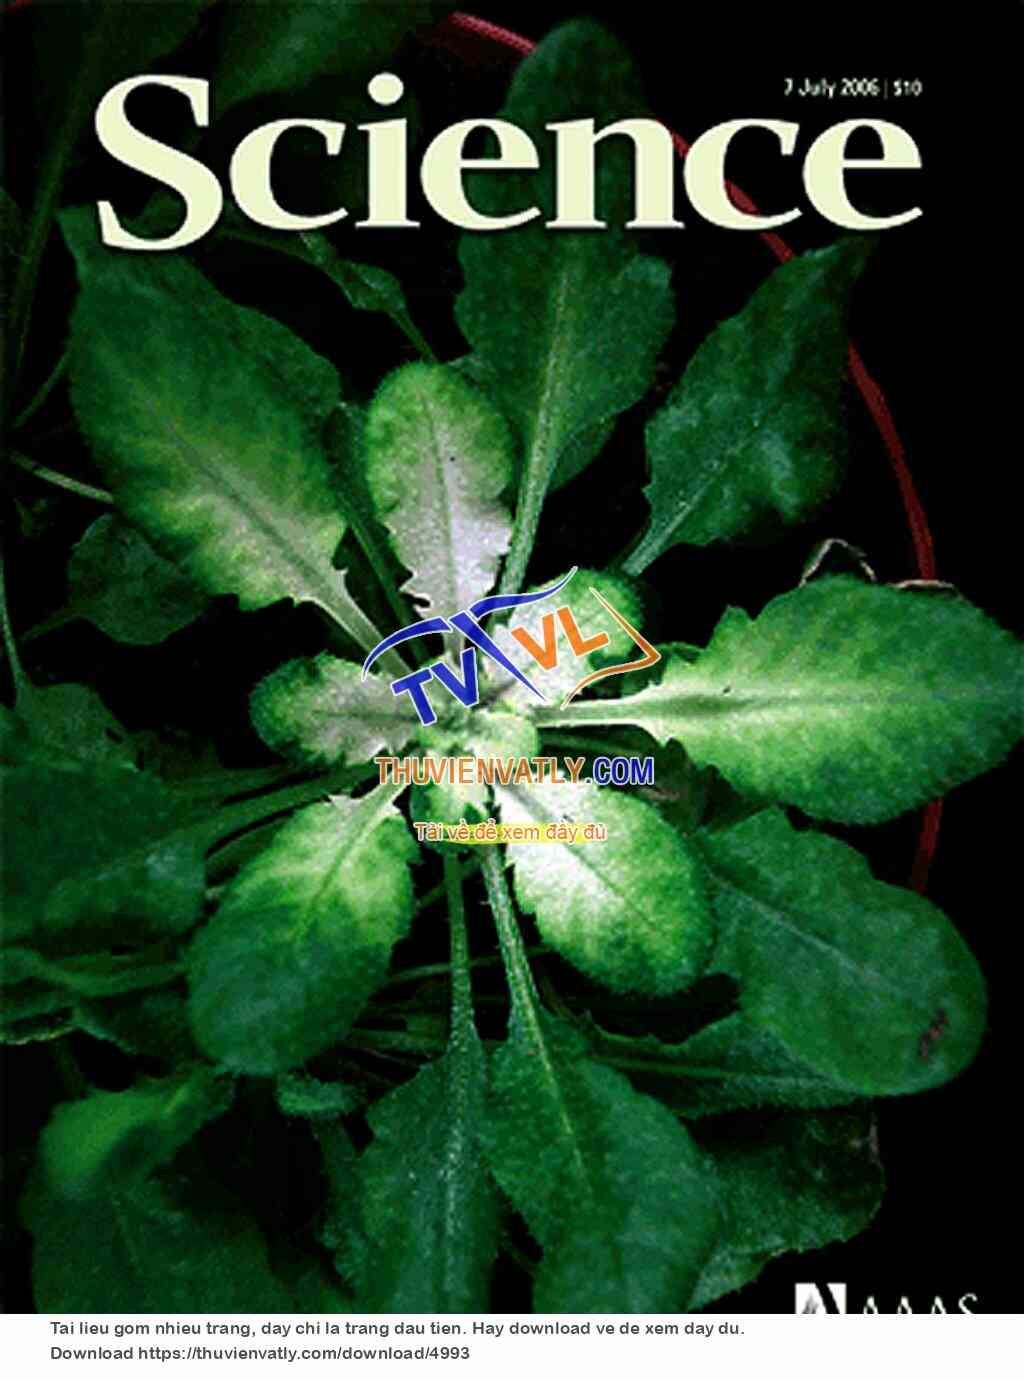 Science Magazine_2006-07-07